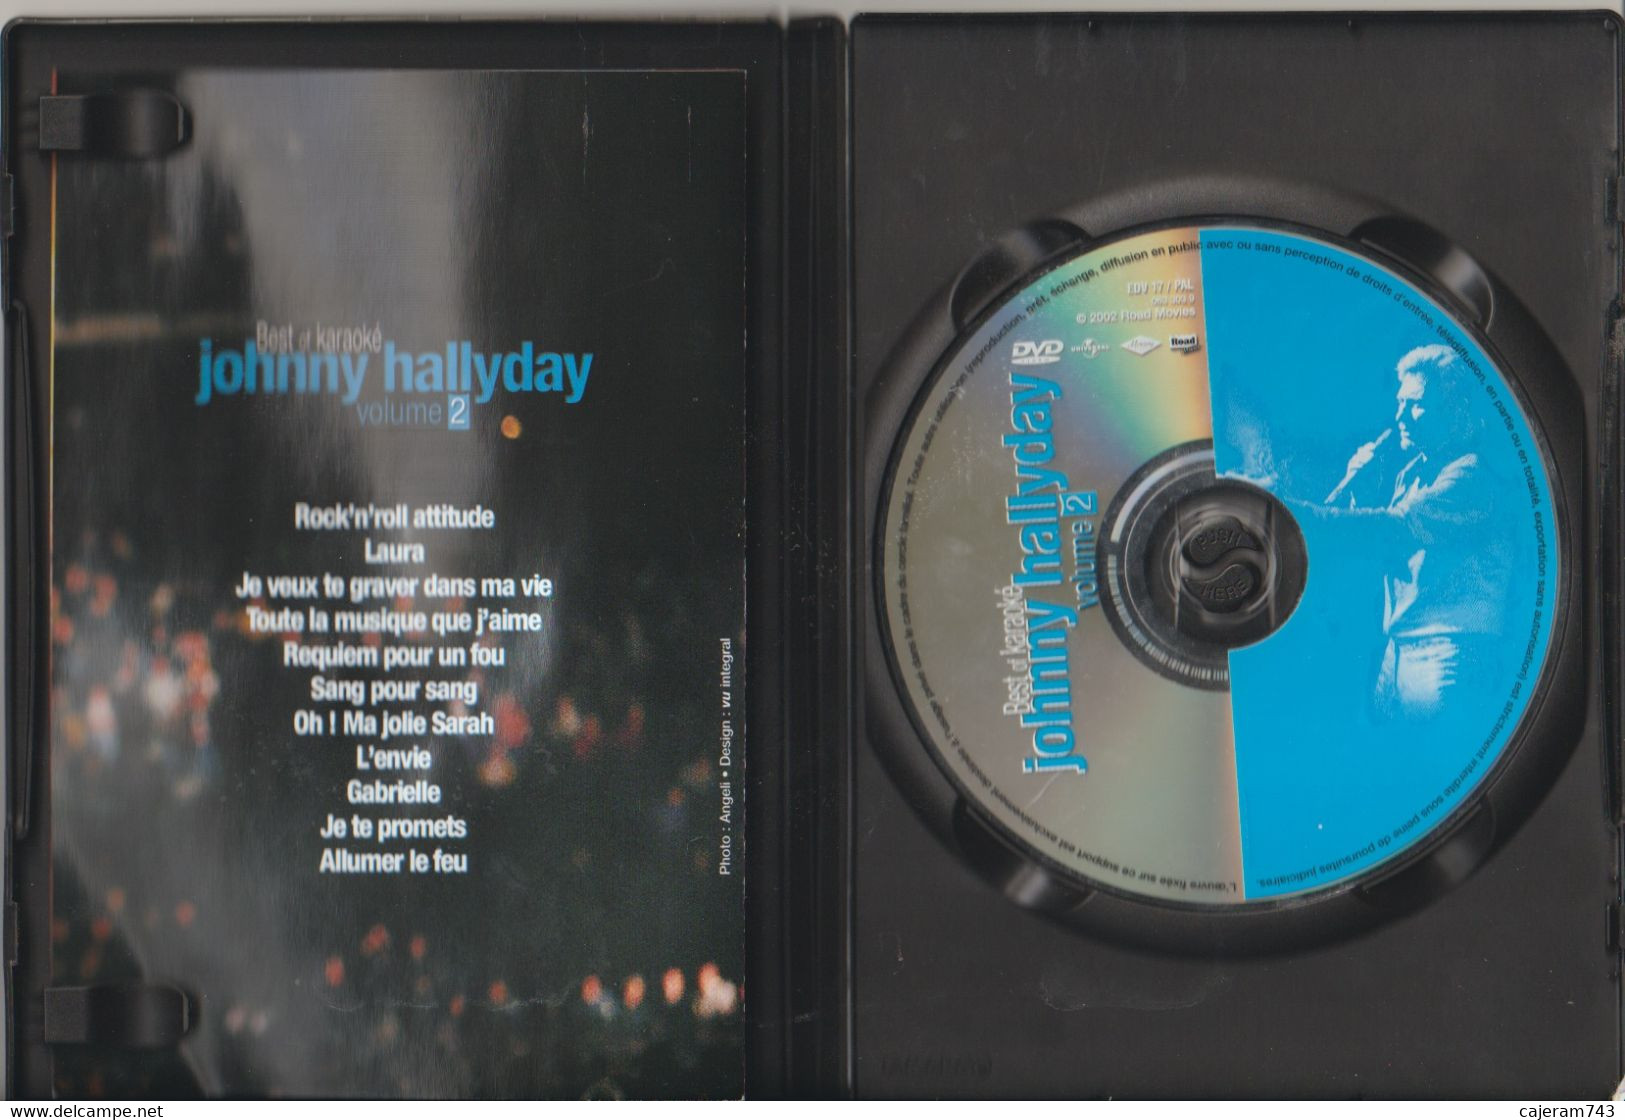 DVD. Johnny HALLYDAY - Best Of Karaoké - Volume 2 - 11 Titres - - Concert & Music